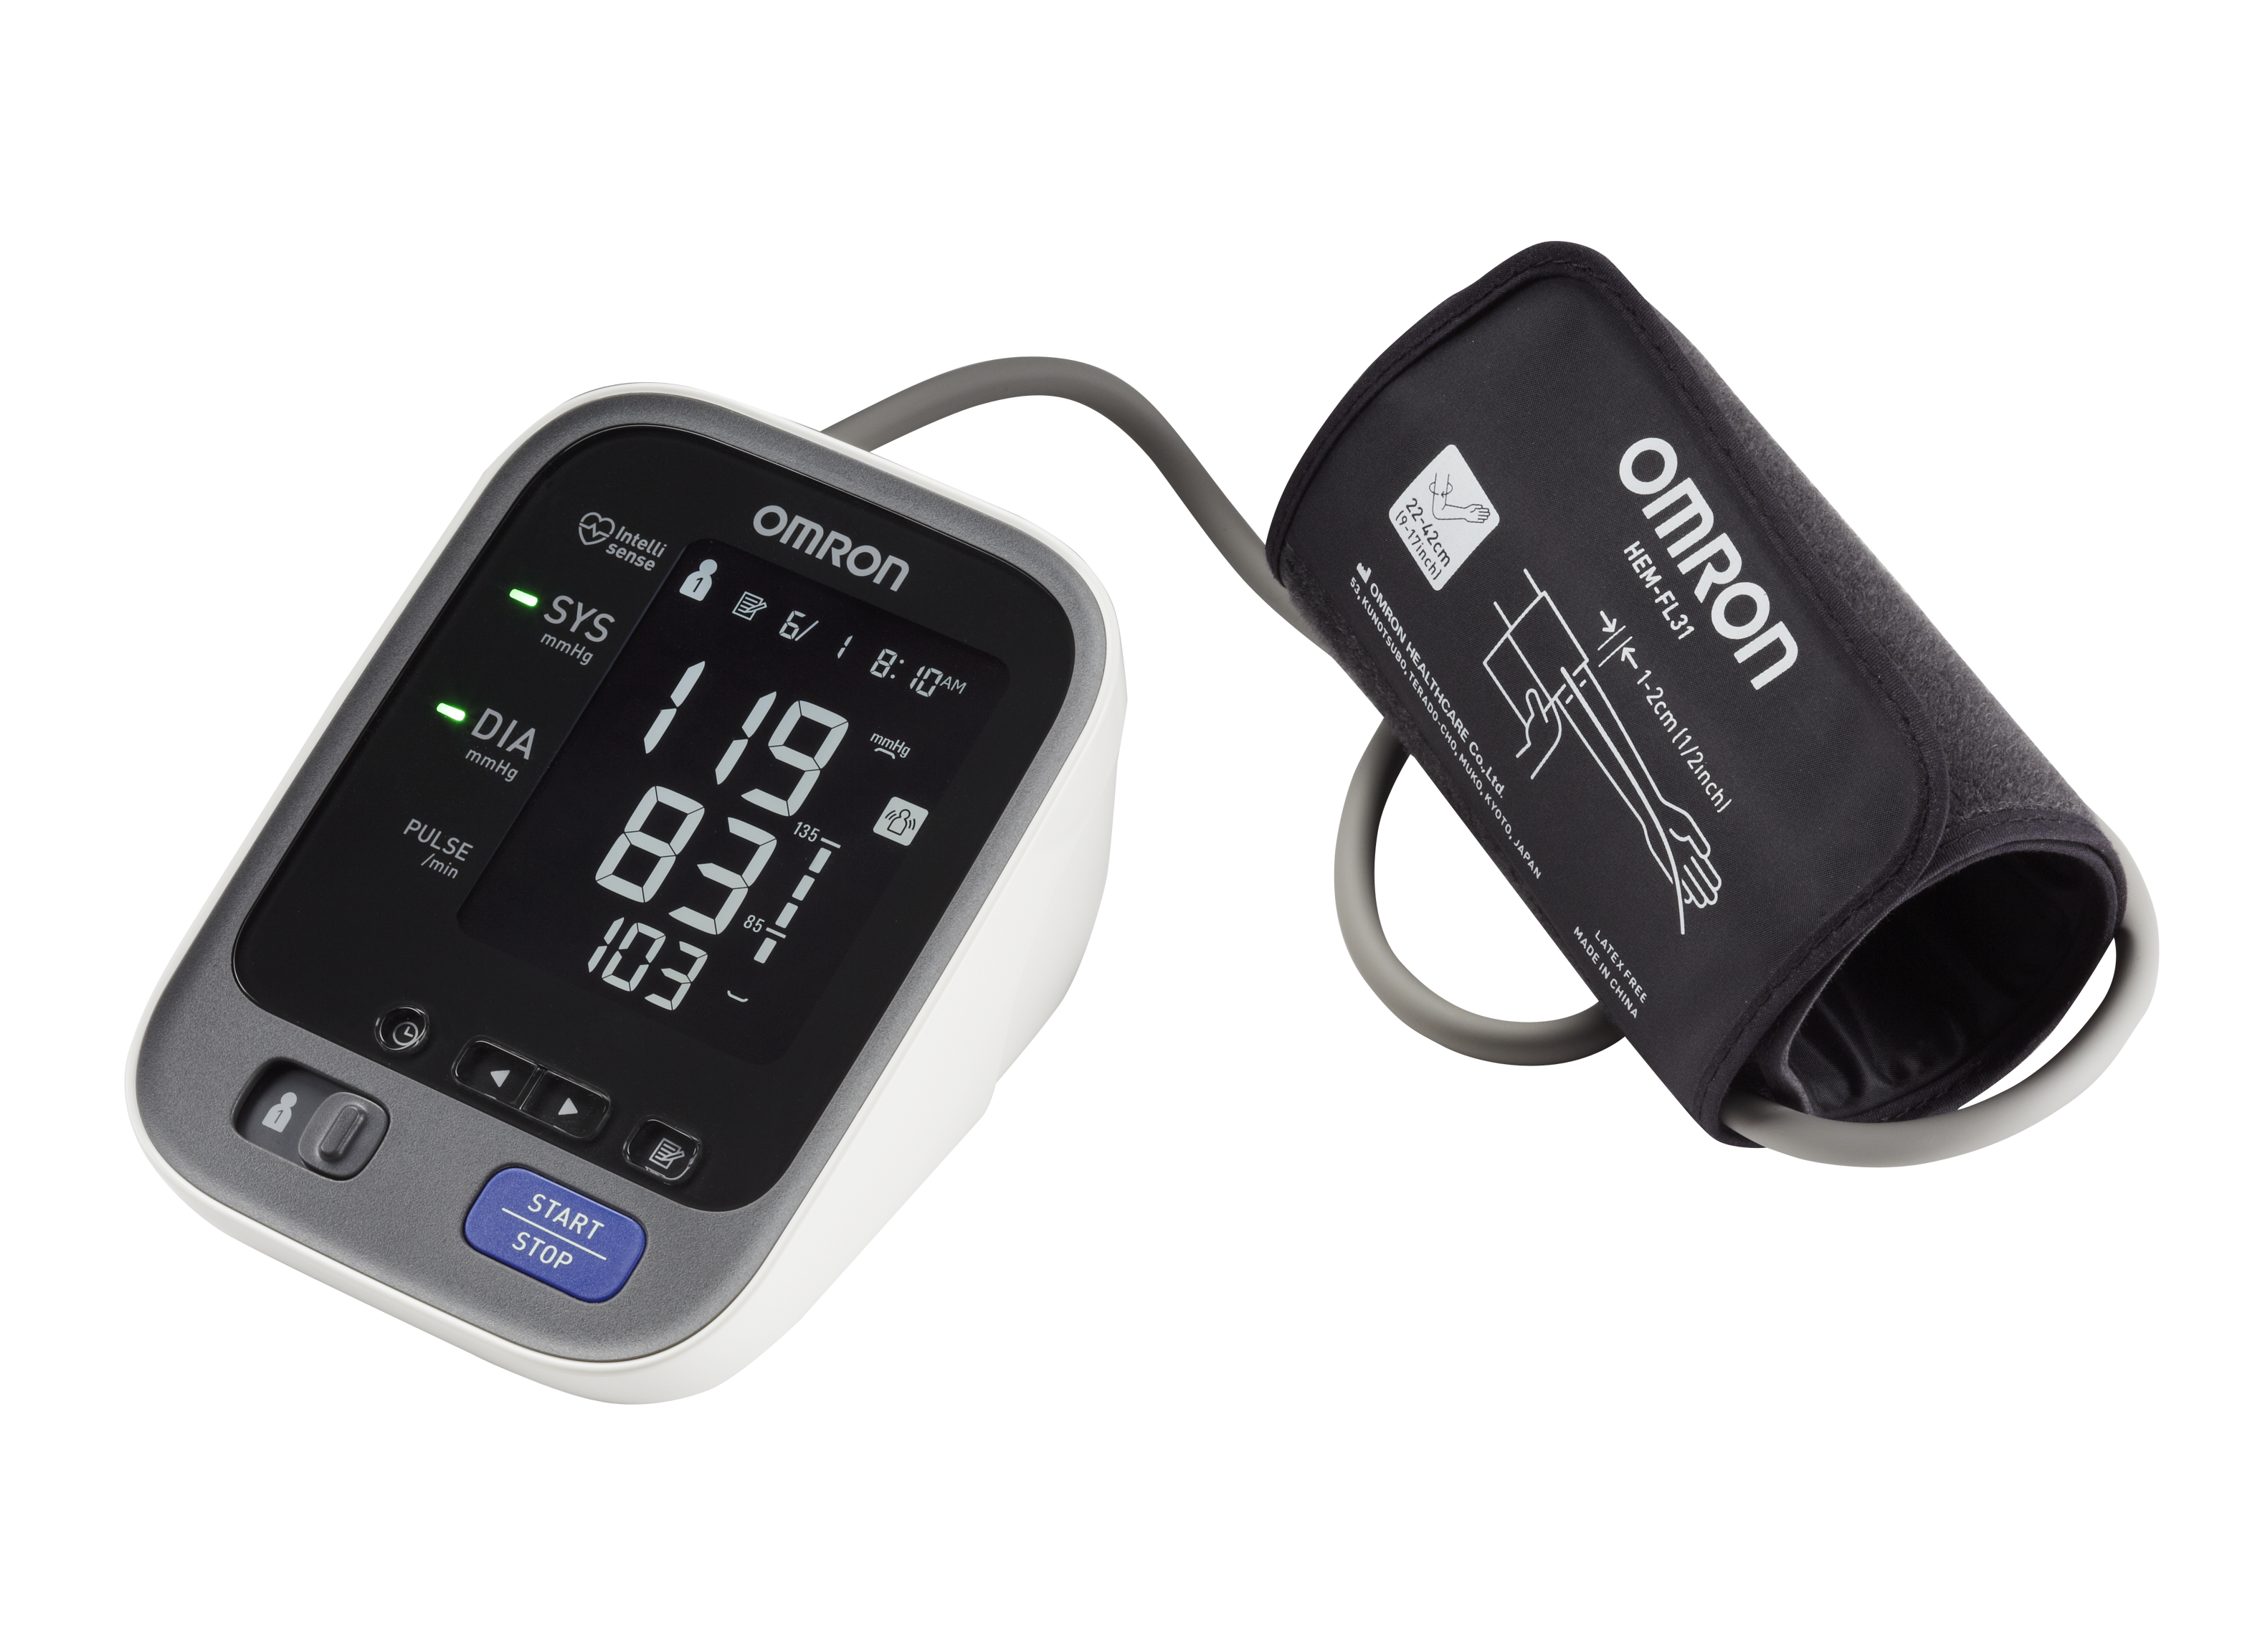 Omron 10 Series BP785 Upper Arm Blood Pressure Monitor